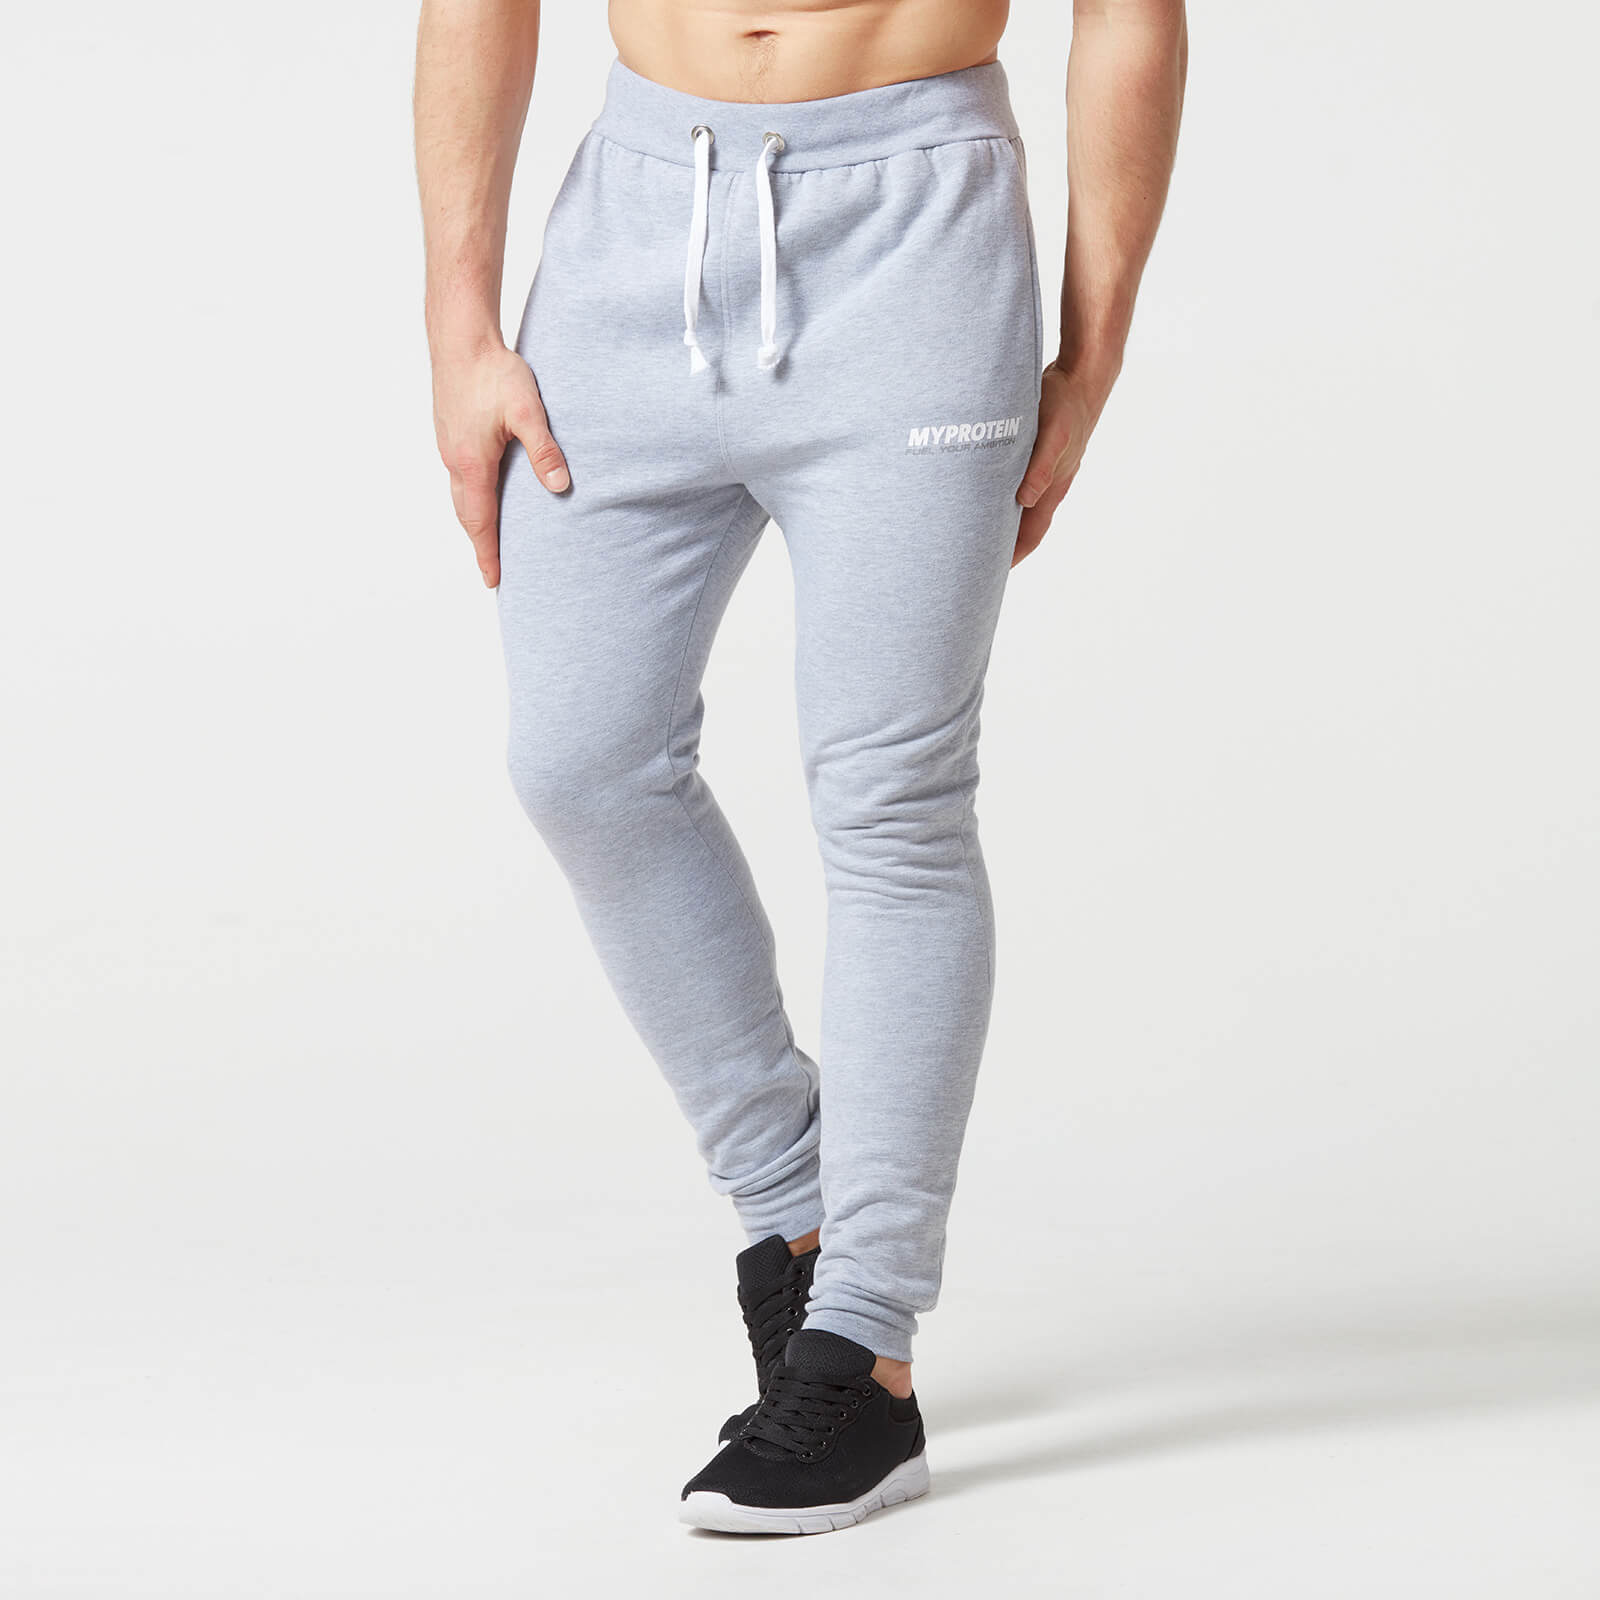 Myprotein Men's Skinny Fit Sweatpants - Grey Marl